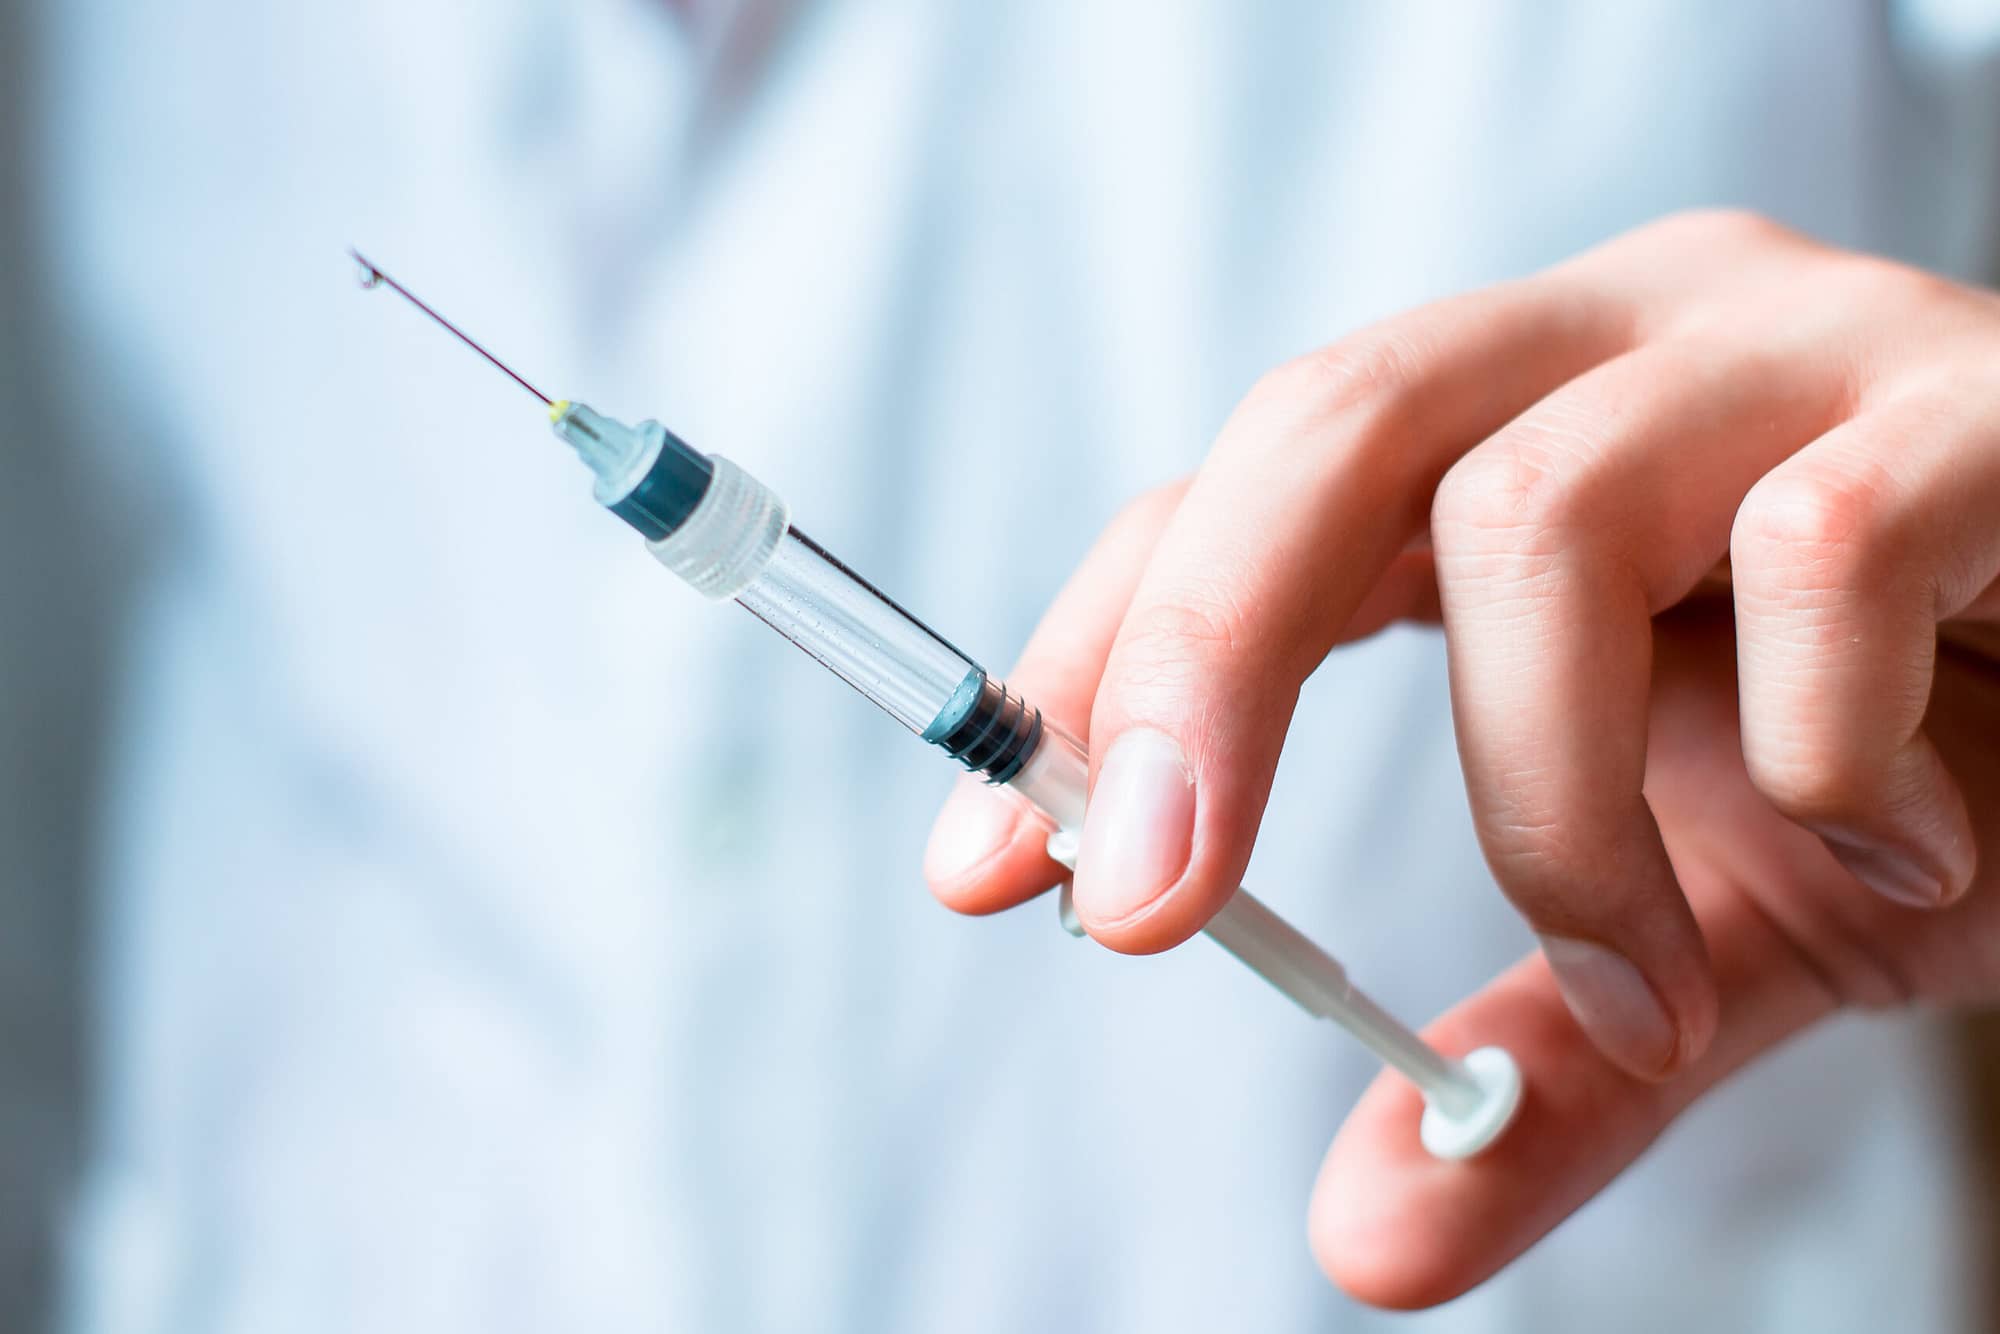 Syringe, medical injection